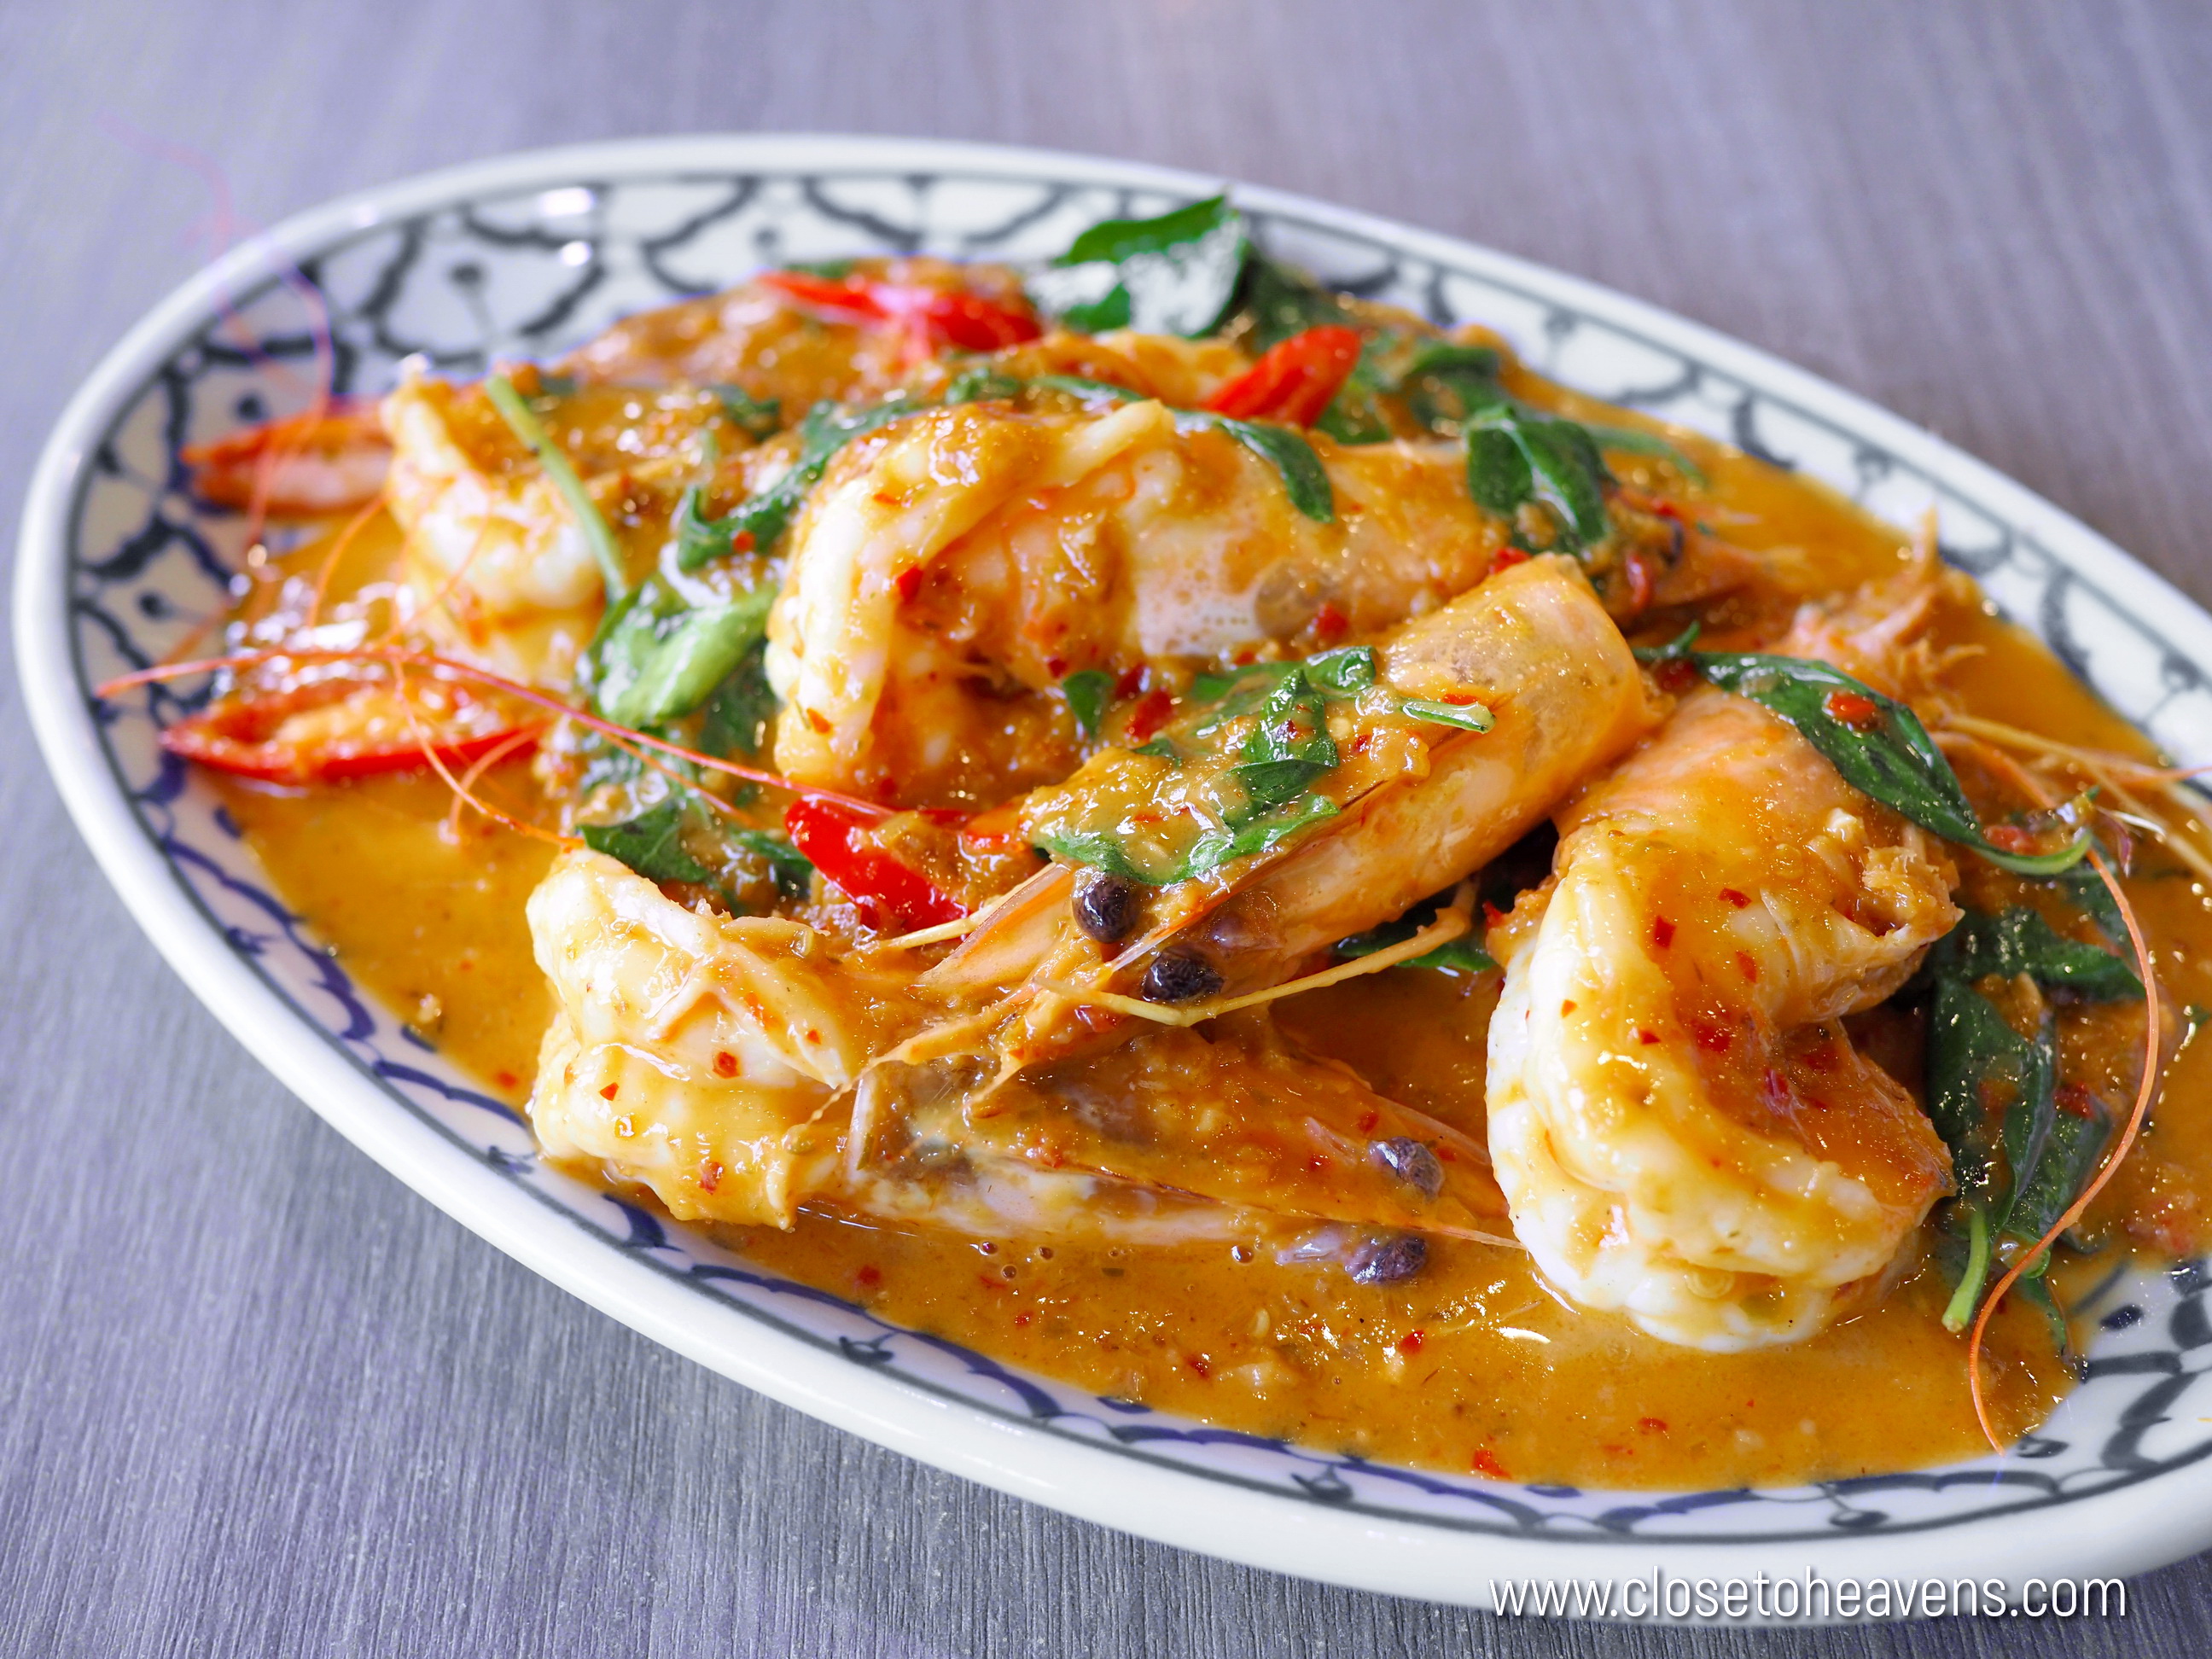 Kungthong Seafood กุ้งทอง ซีฟู้ด พระราม 4